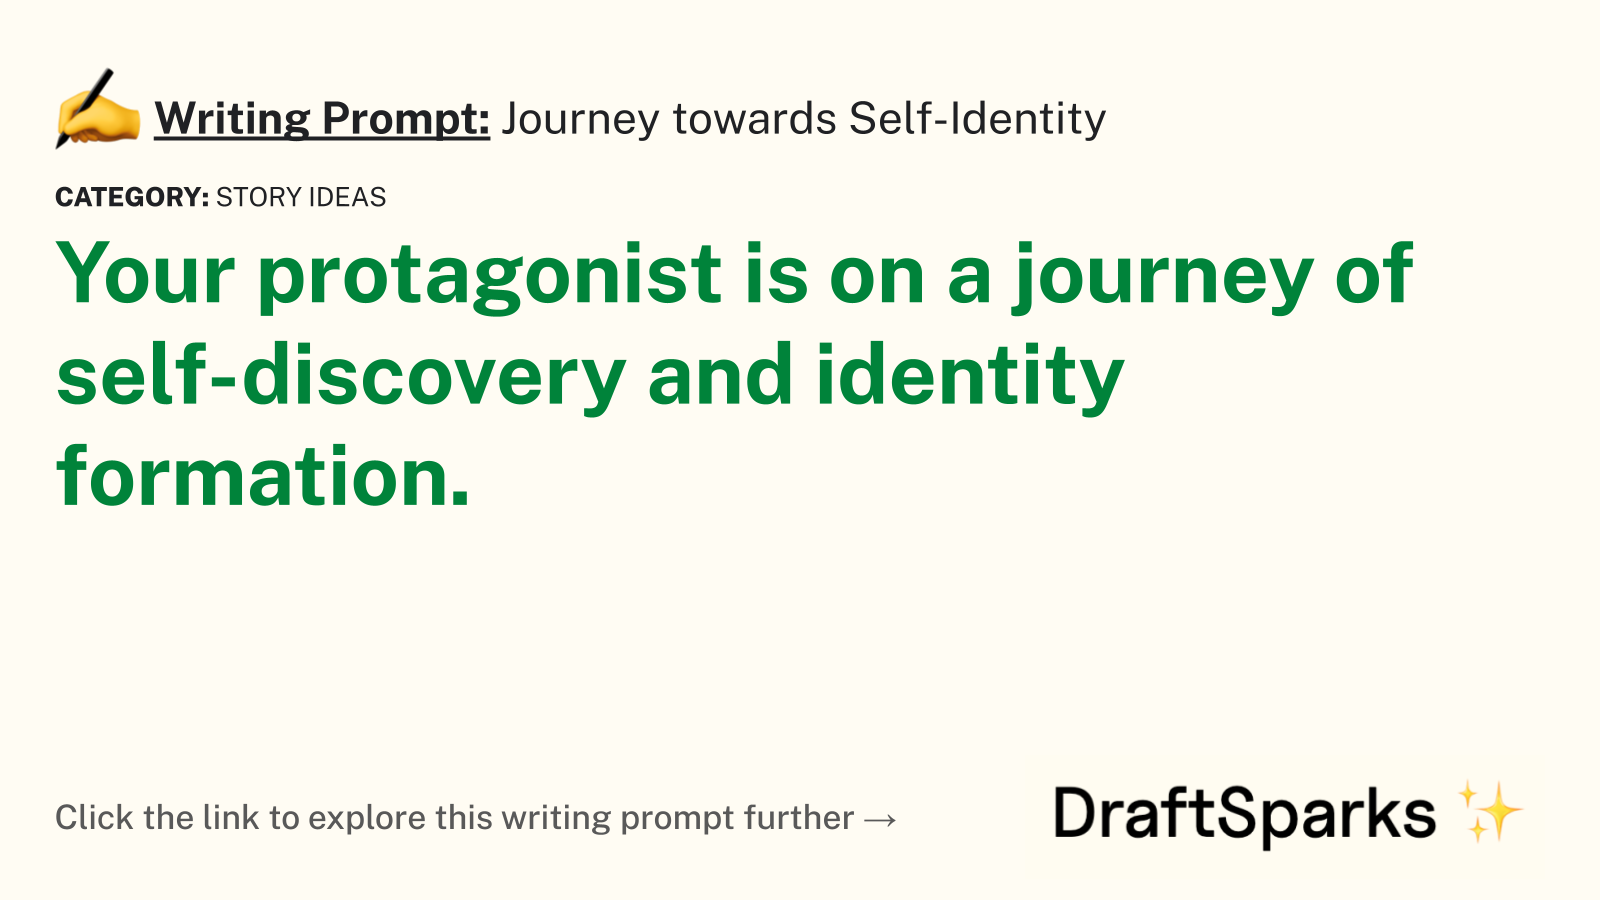 Journey towards Self-Identity